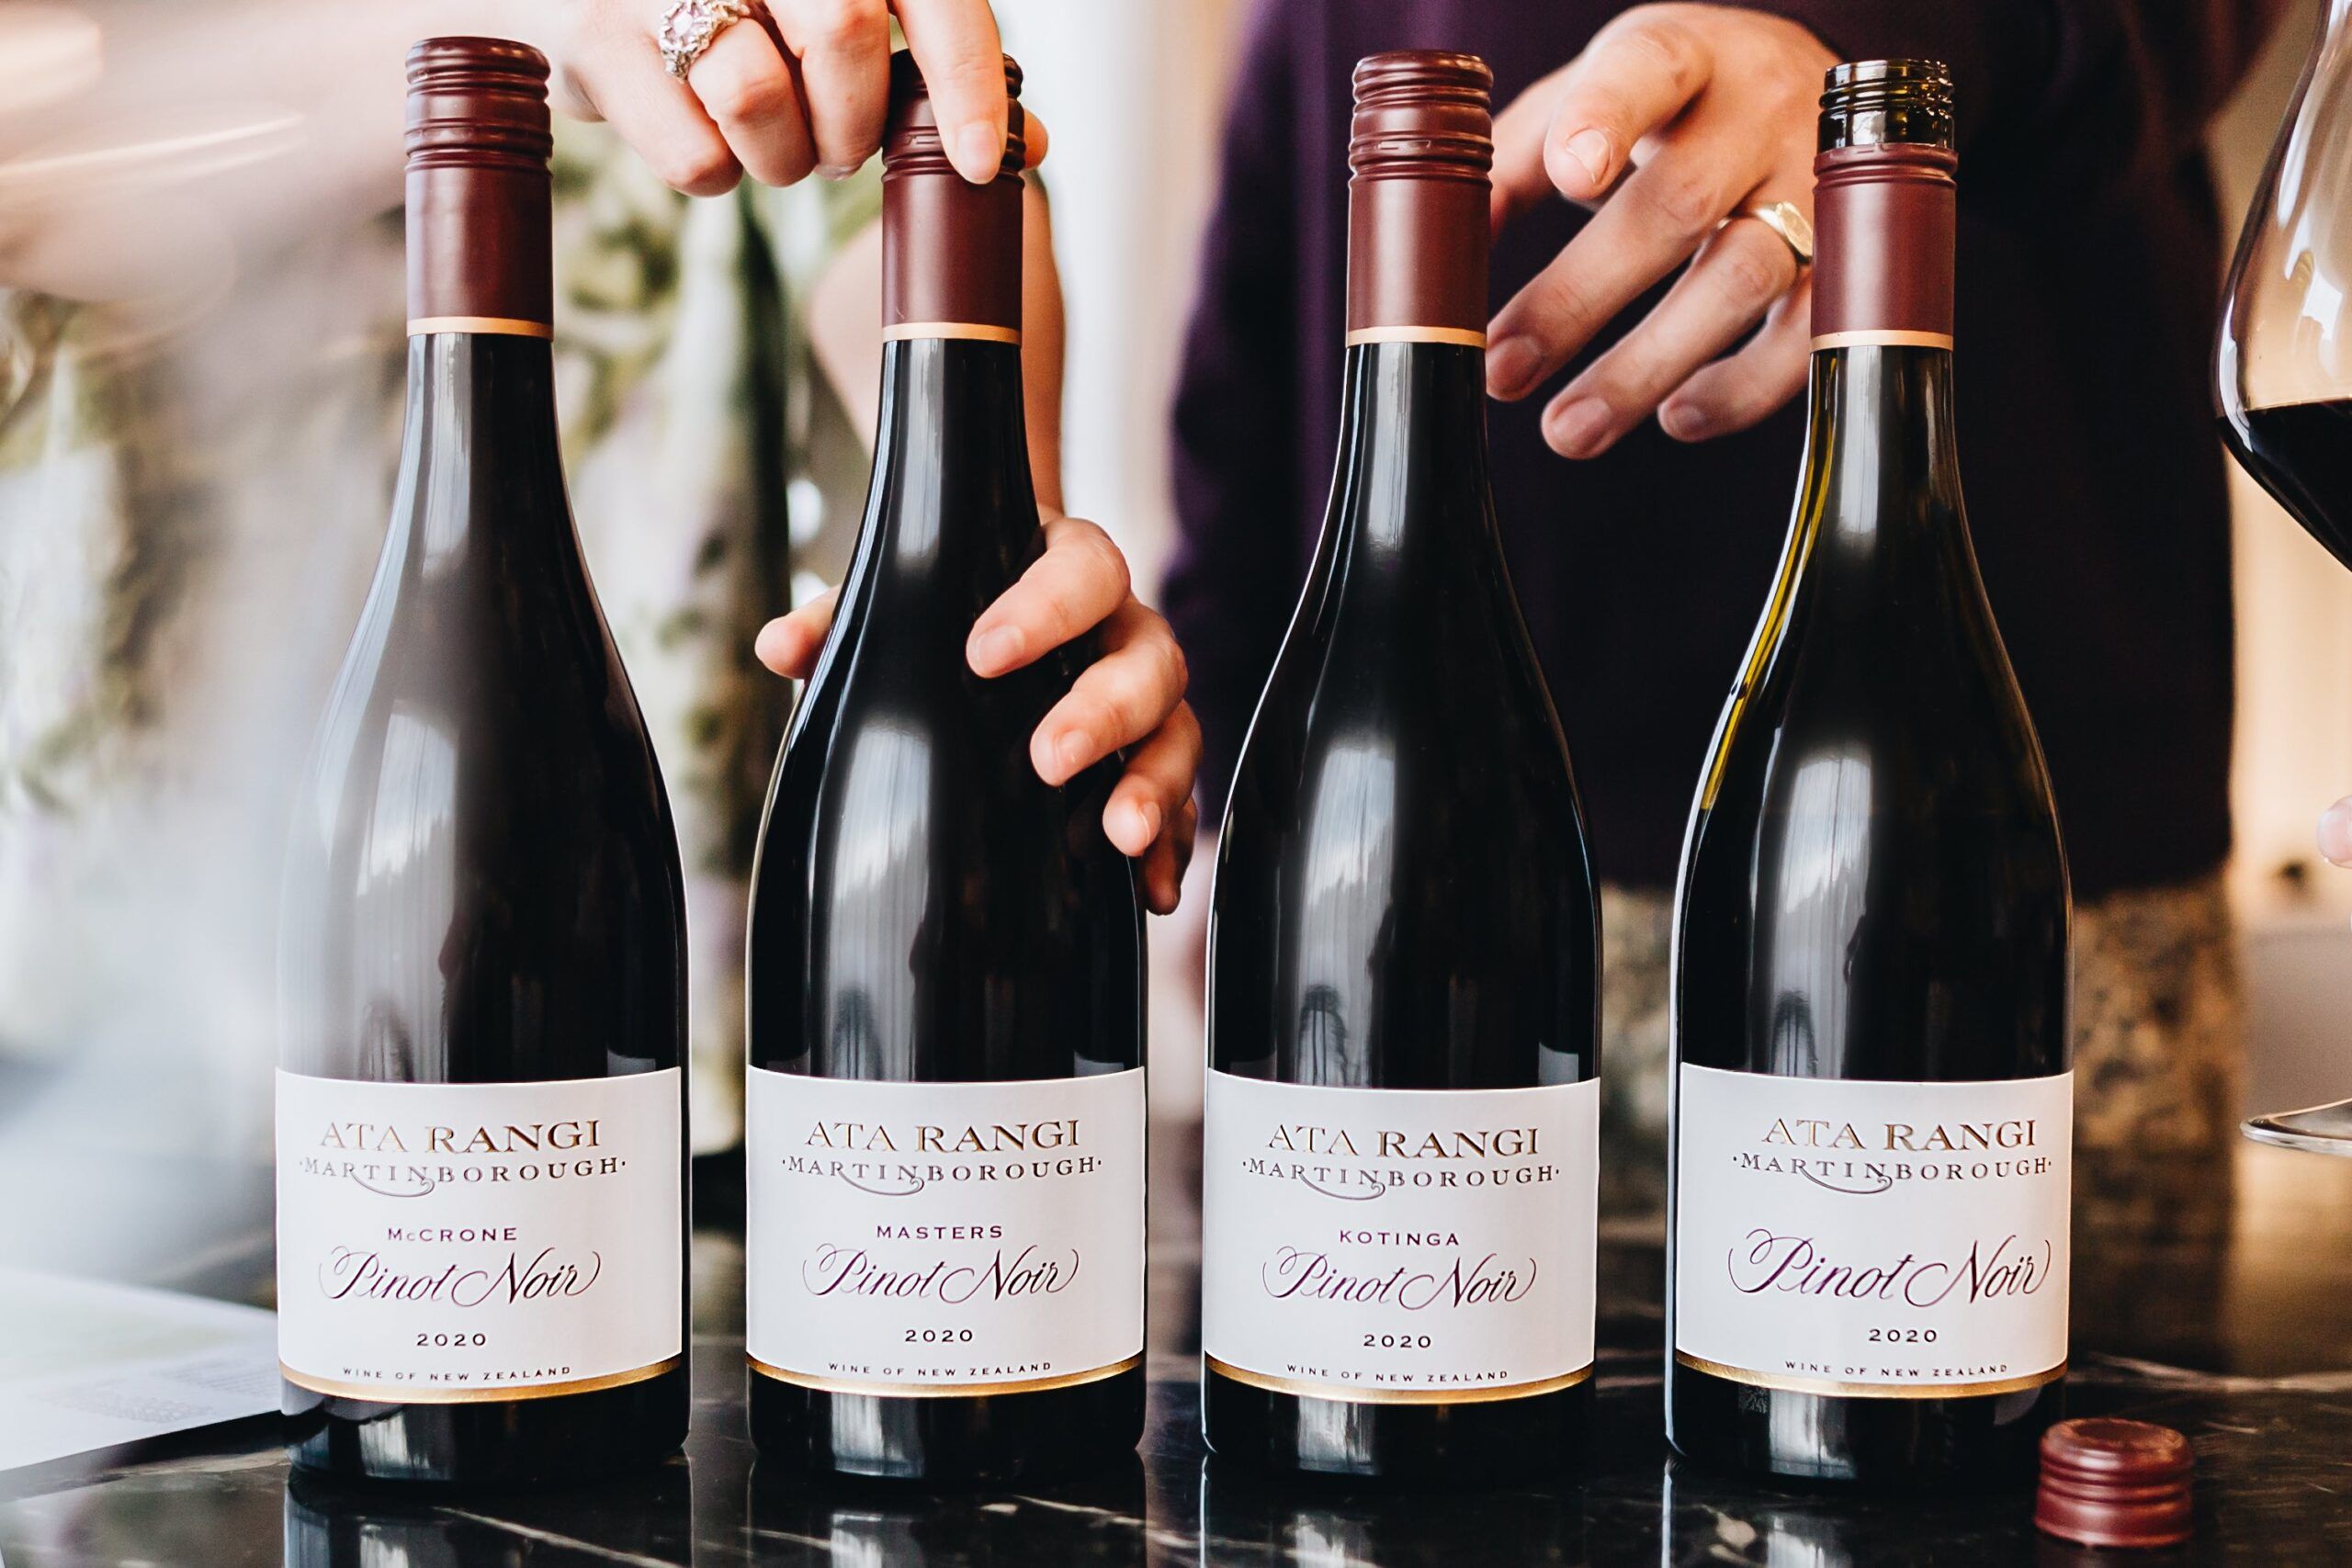 Why Ata Rangi’s single vineyard Pinot Noirs are so important